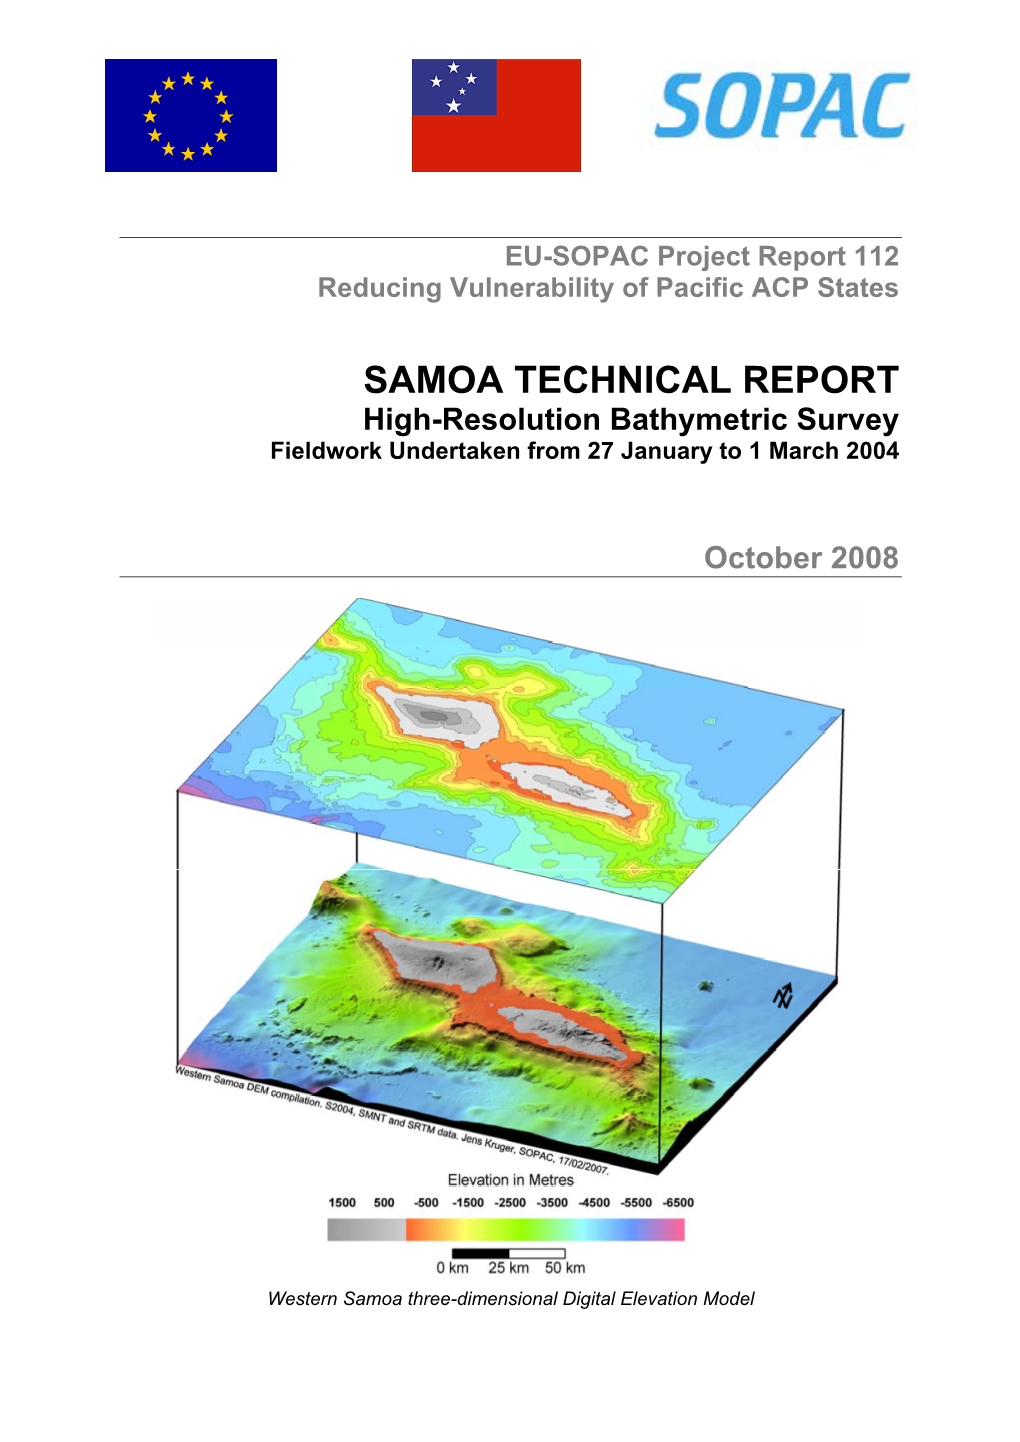 High-Resolution Bathymetric Survey of Samoa